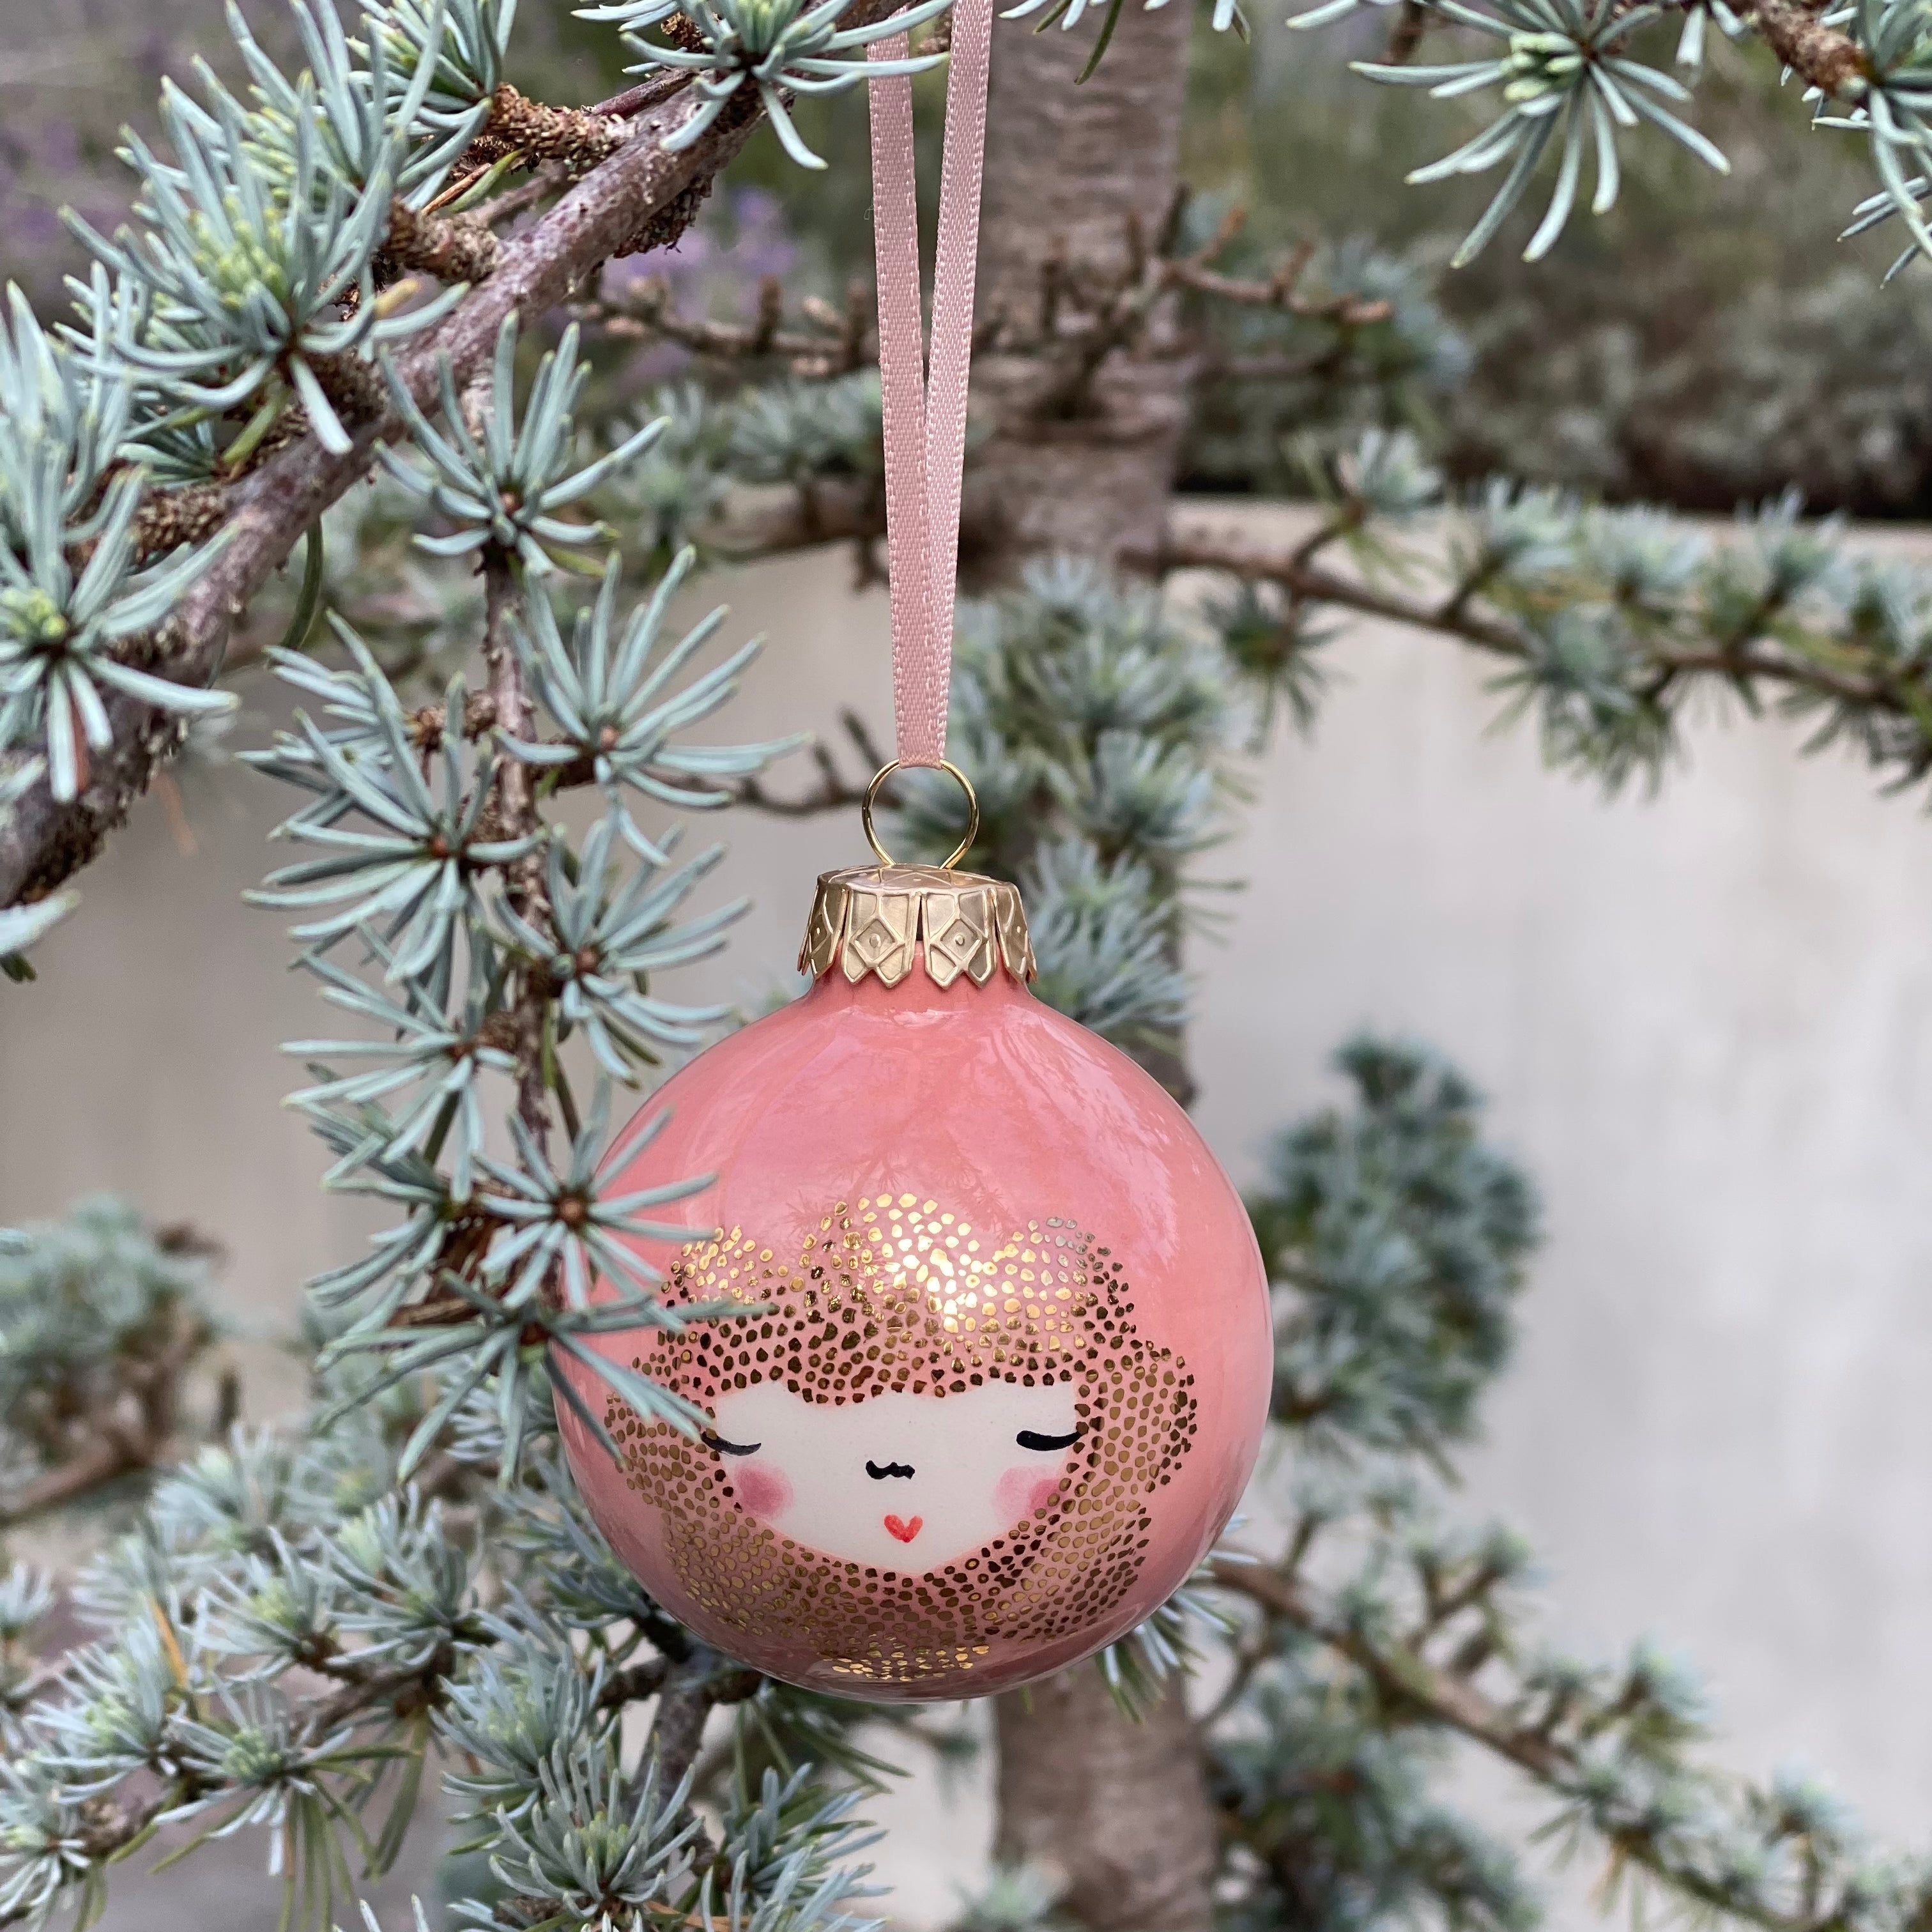 Marinski Heartmade Christmas ball dotty lace - peach pink